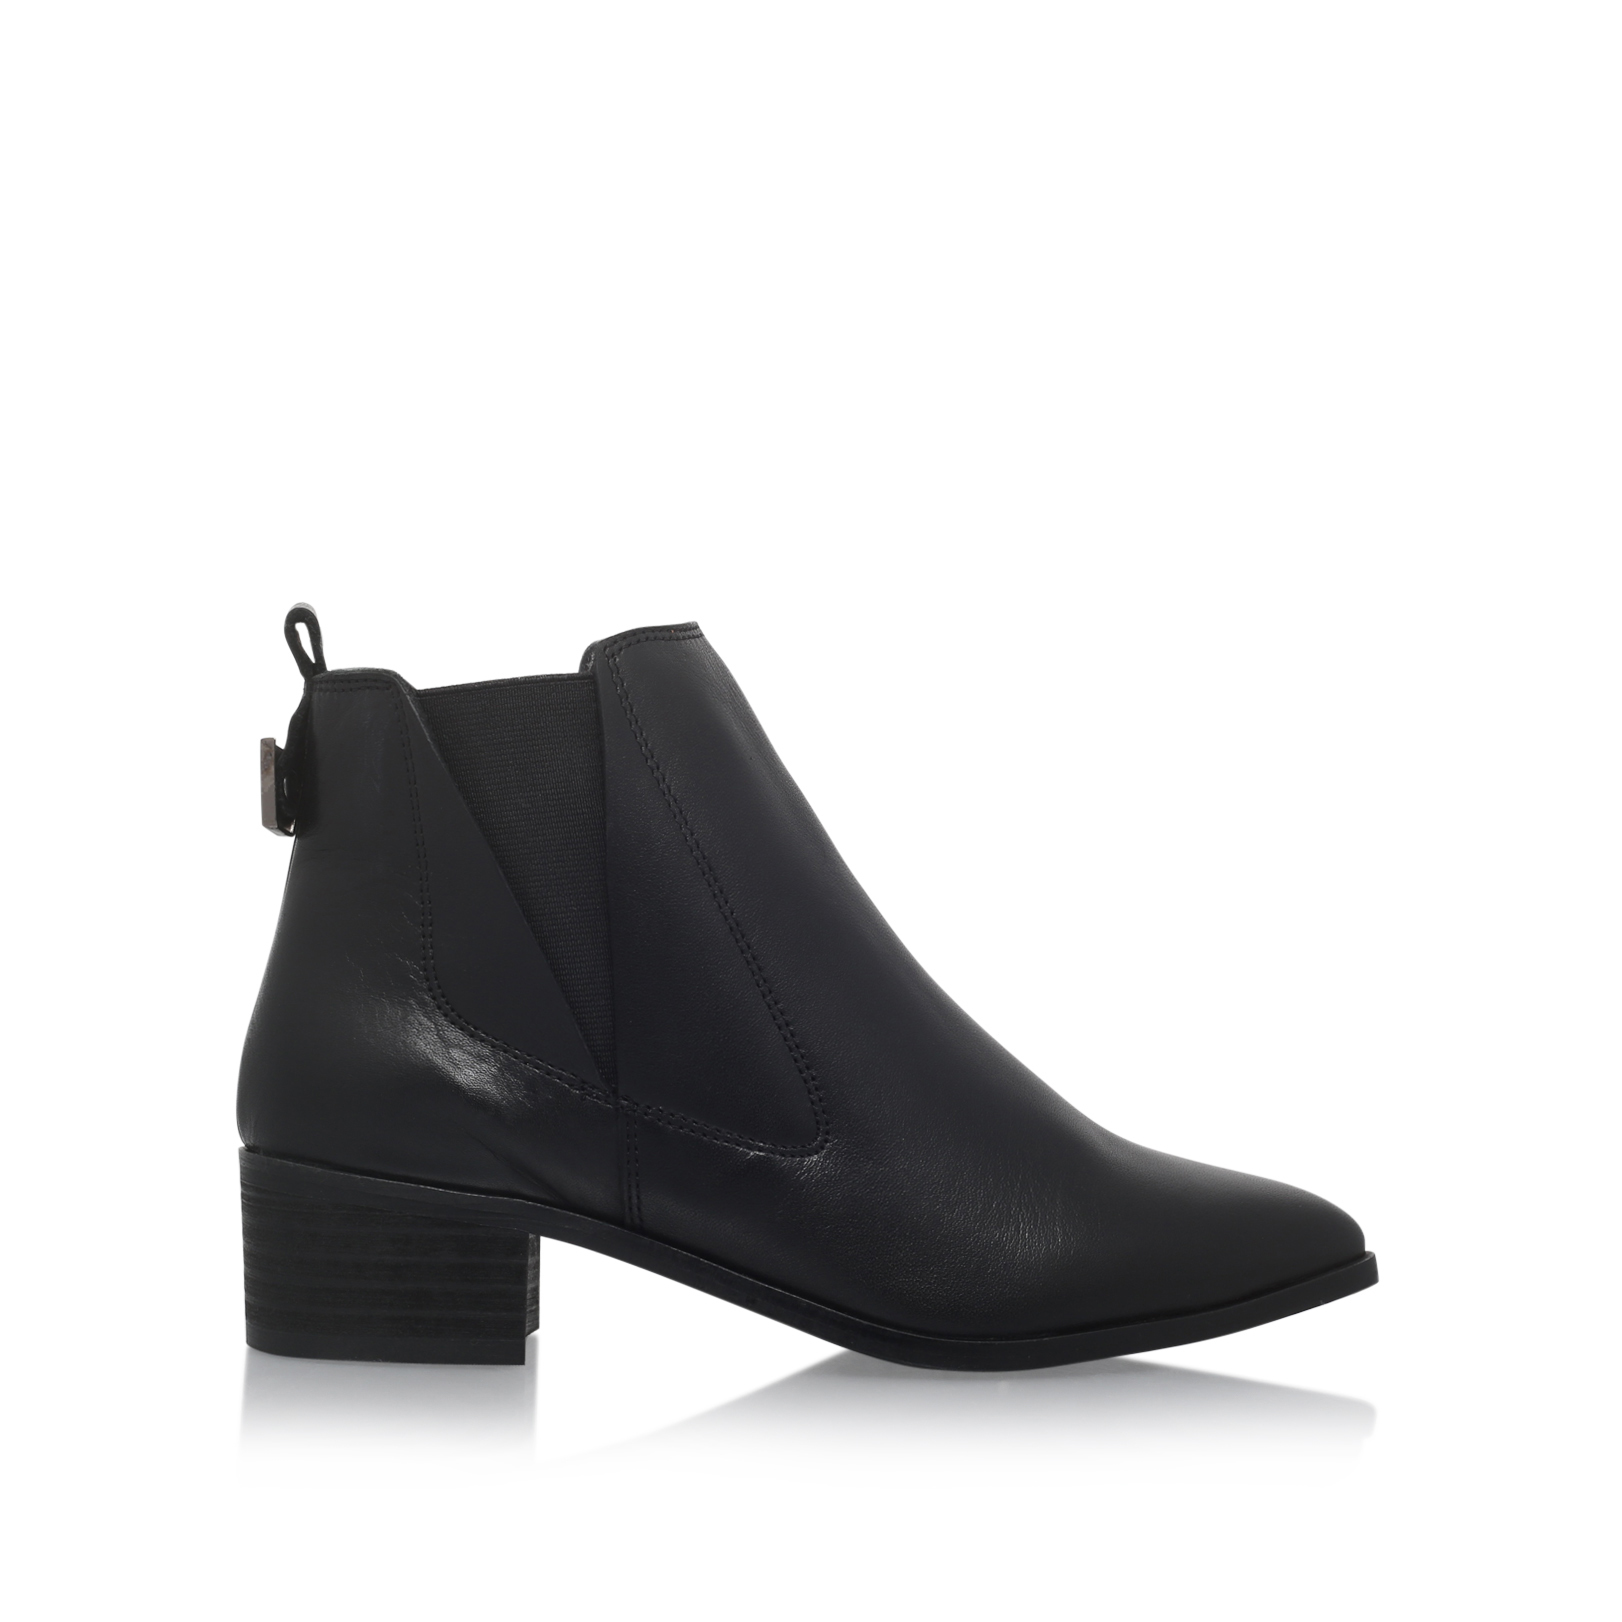 SIMPLE Carvela Simple Black Leather Ankle Boots by CARVELA